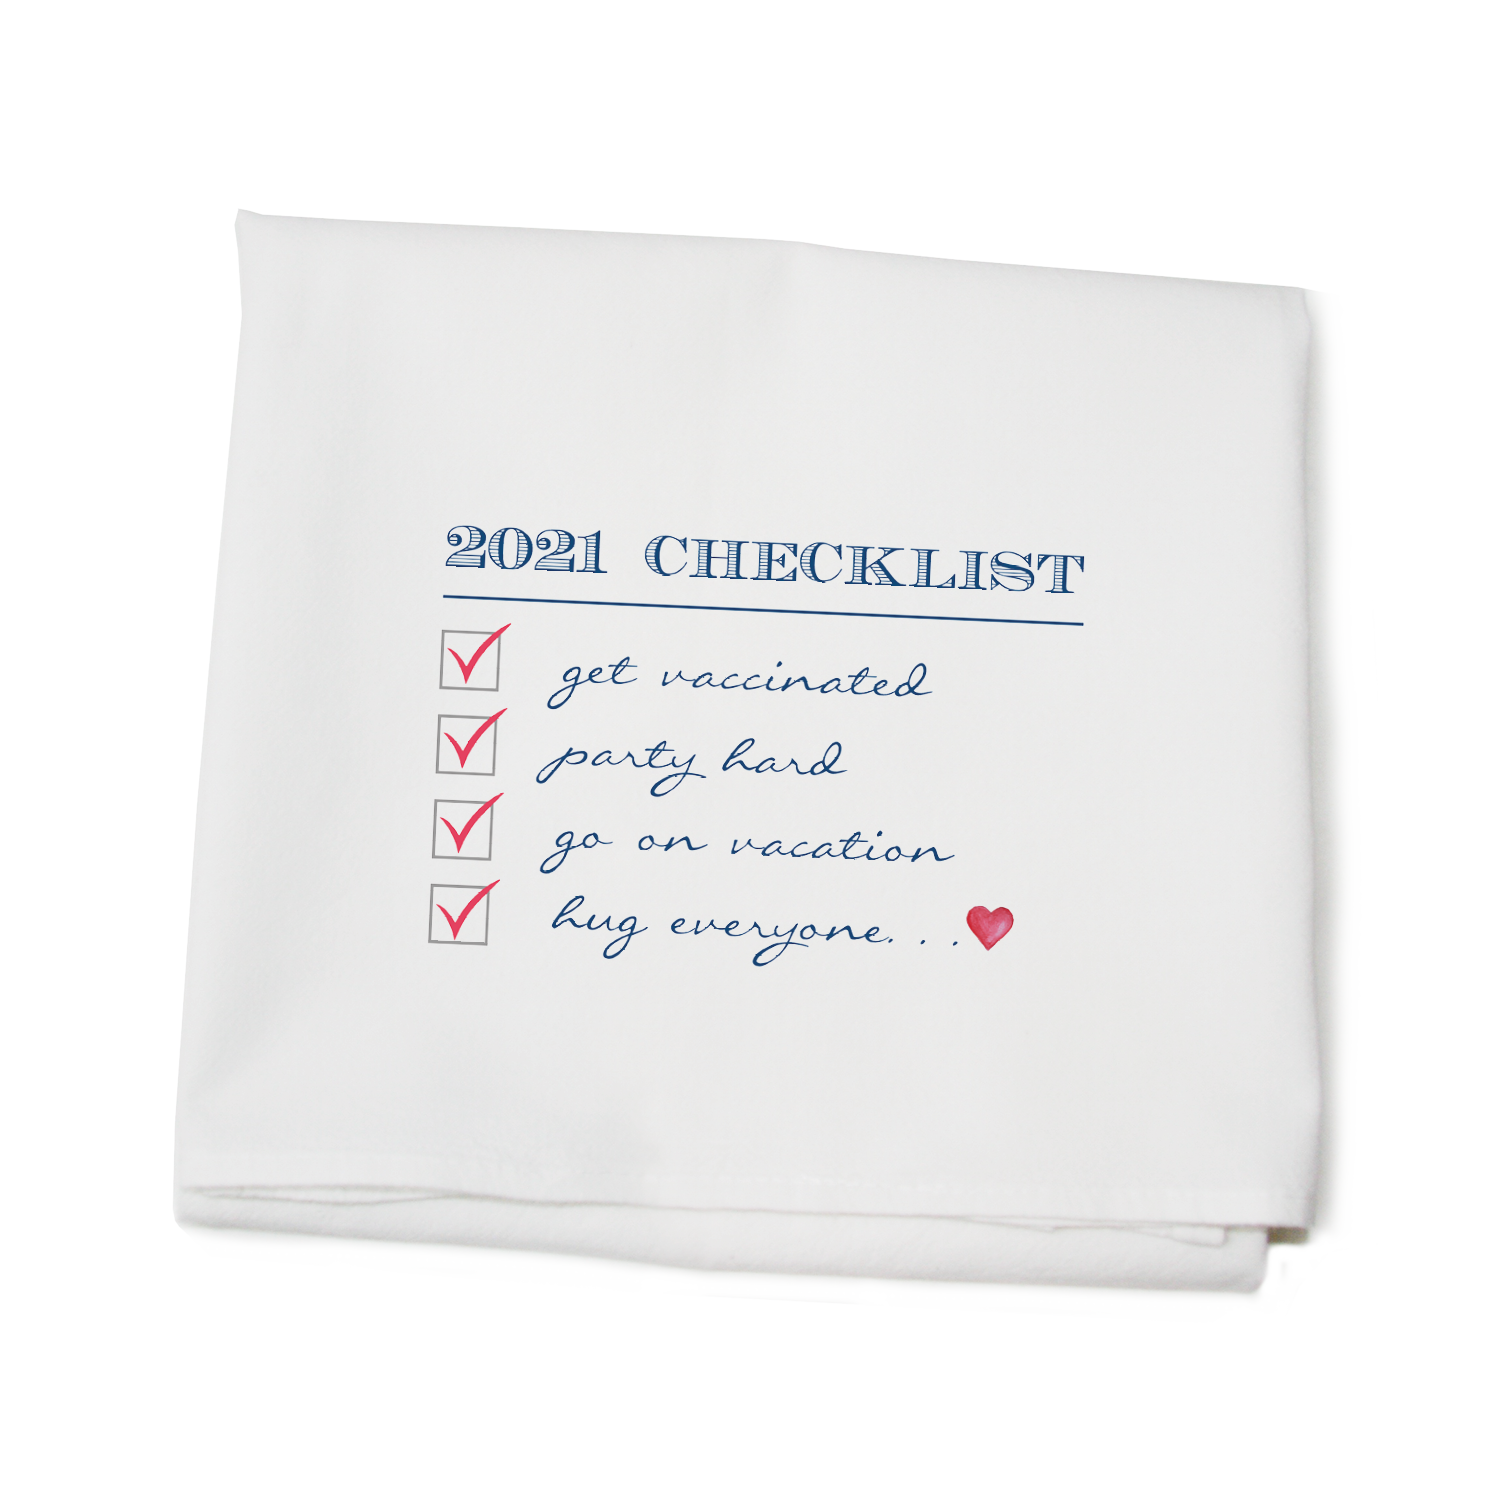 vaccine checklist flour sack towel